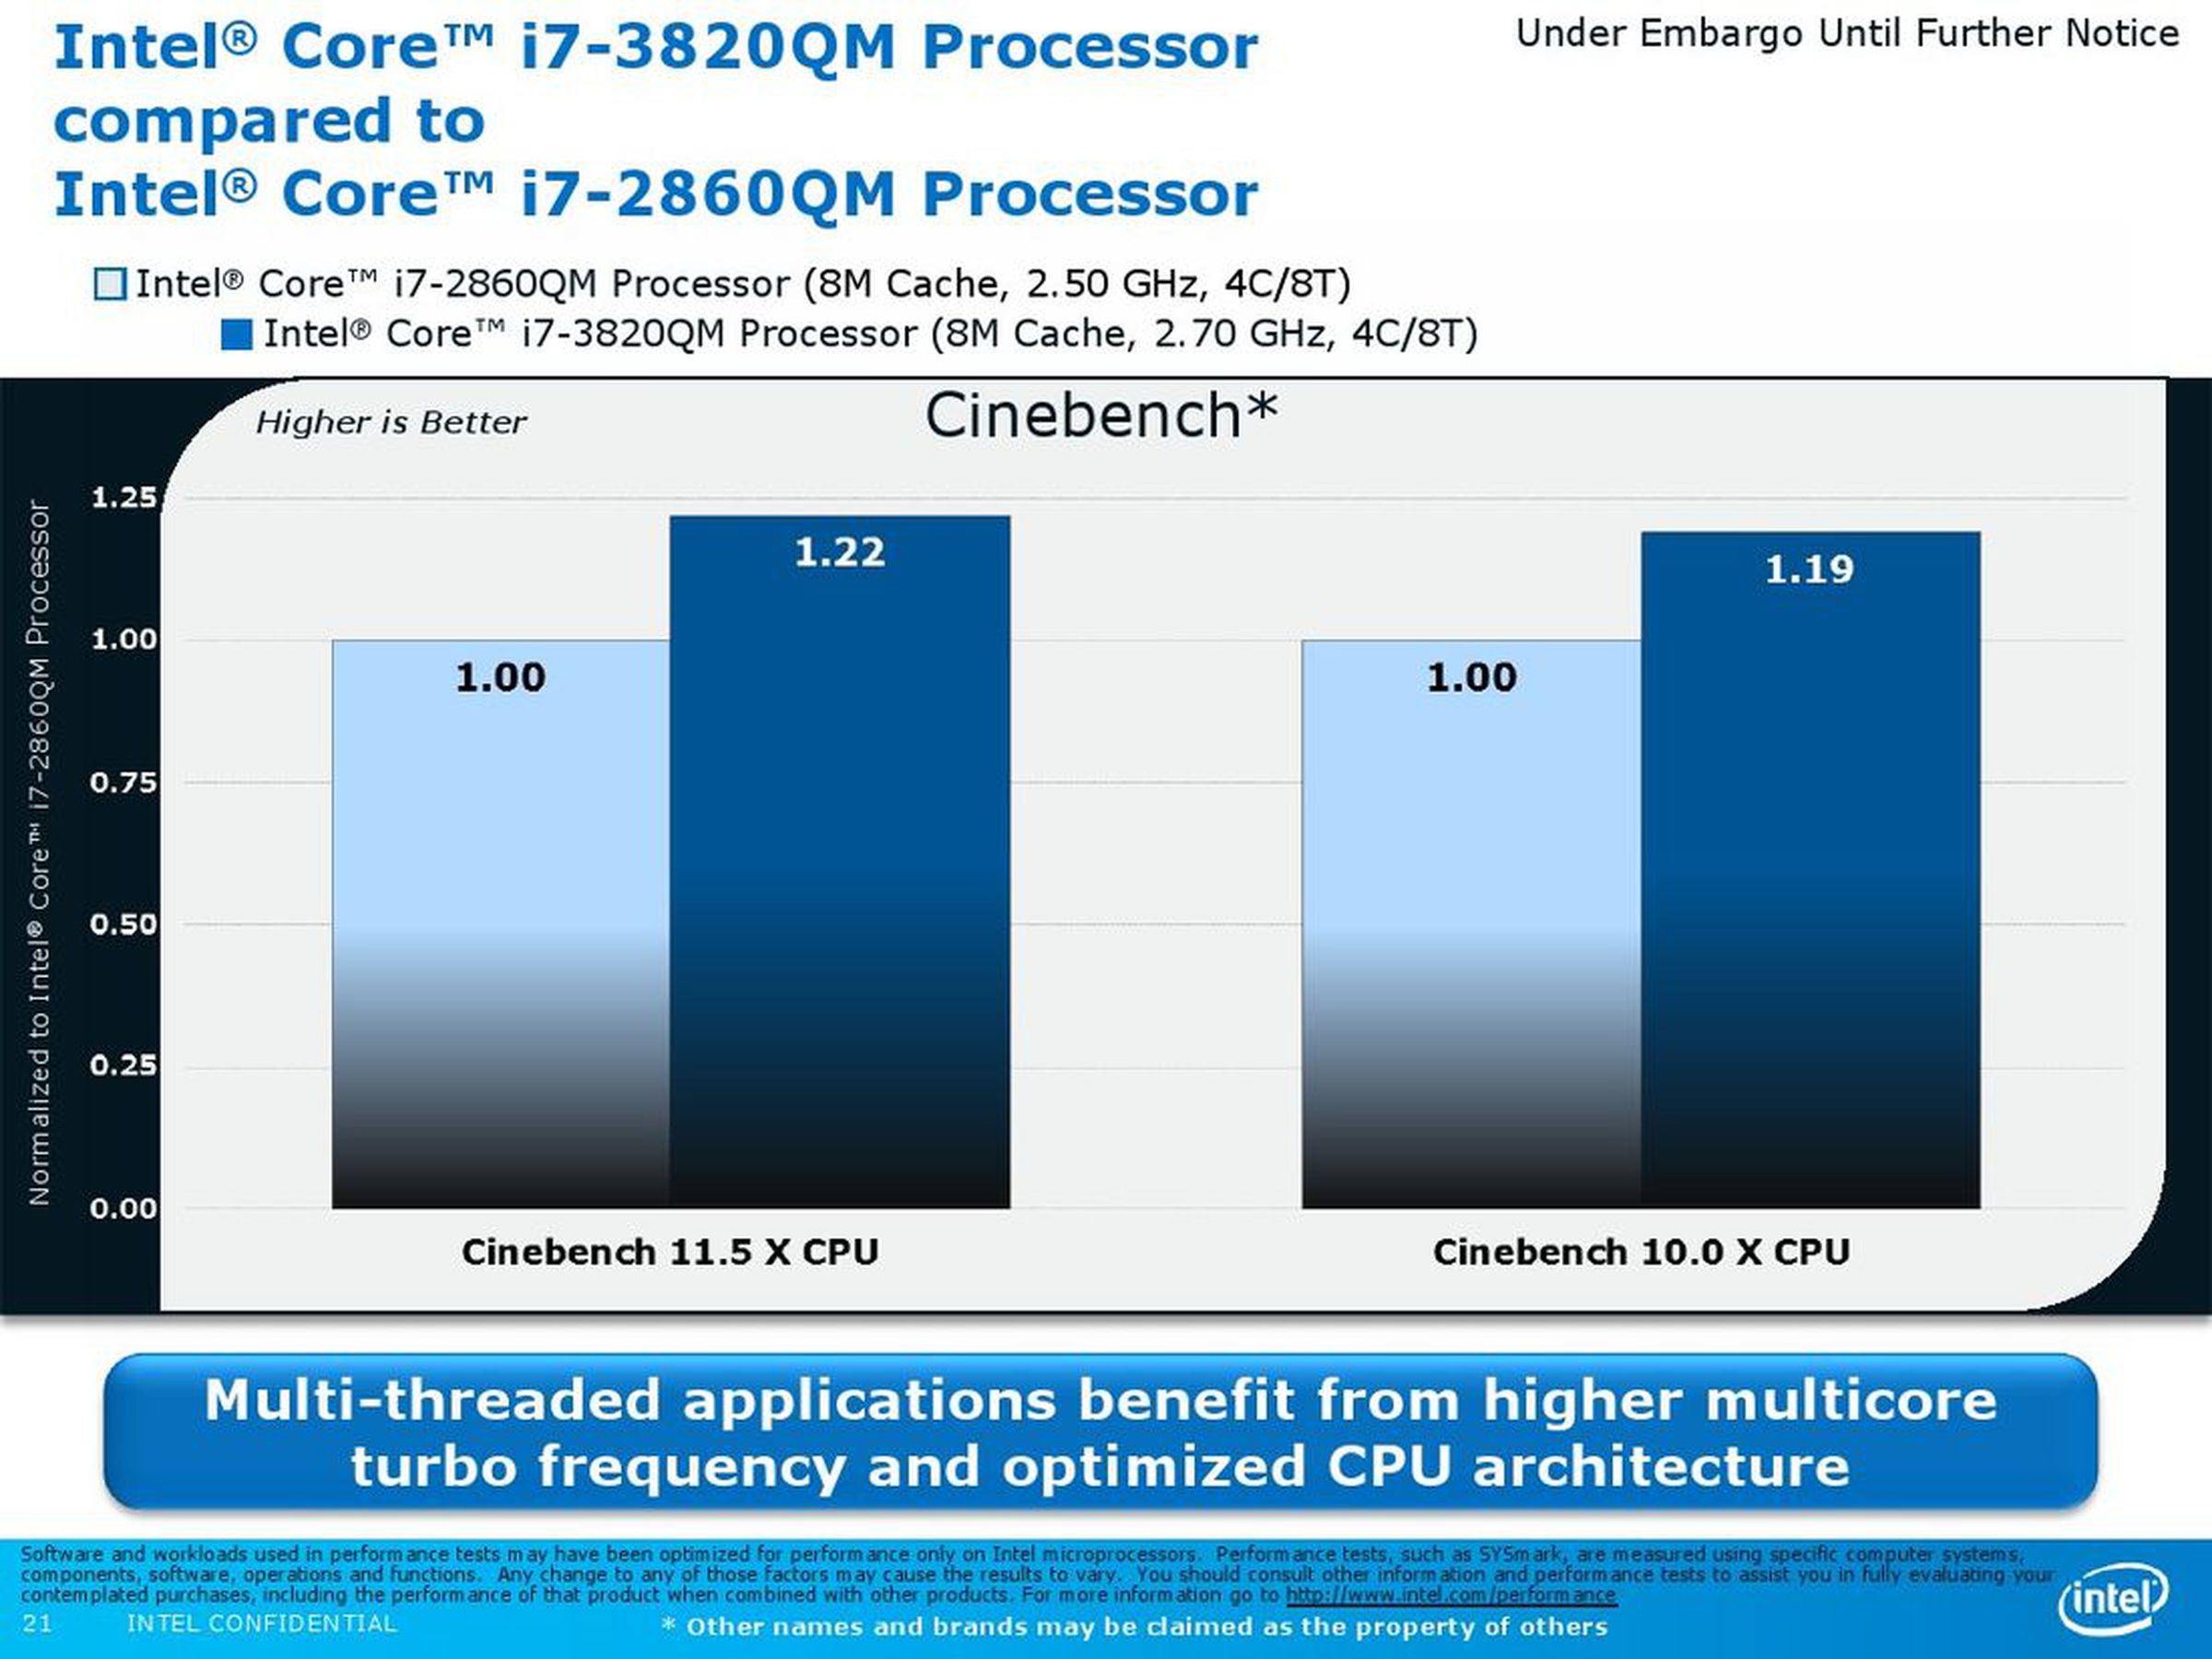 Intel 3rd generation Core processor (Ivy Bridge) slidedeck